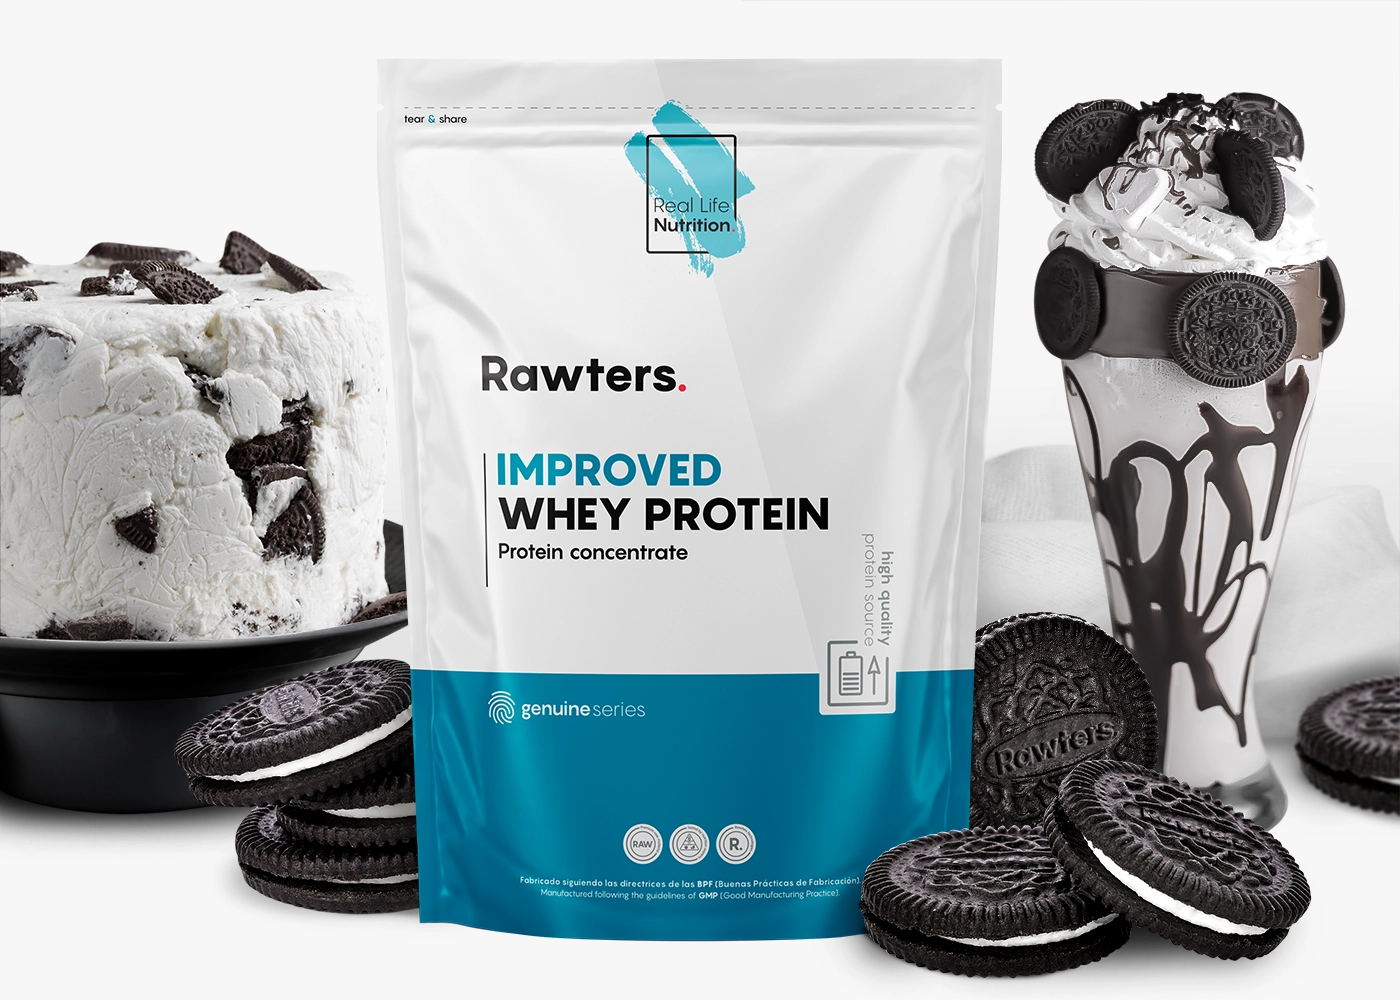 Rawters product